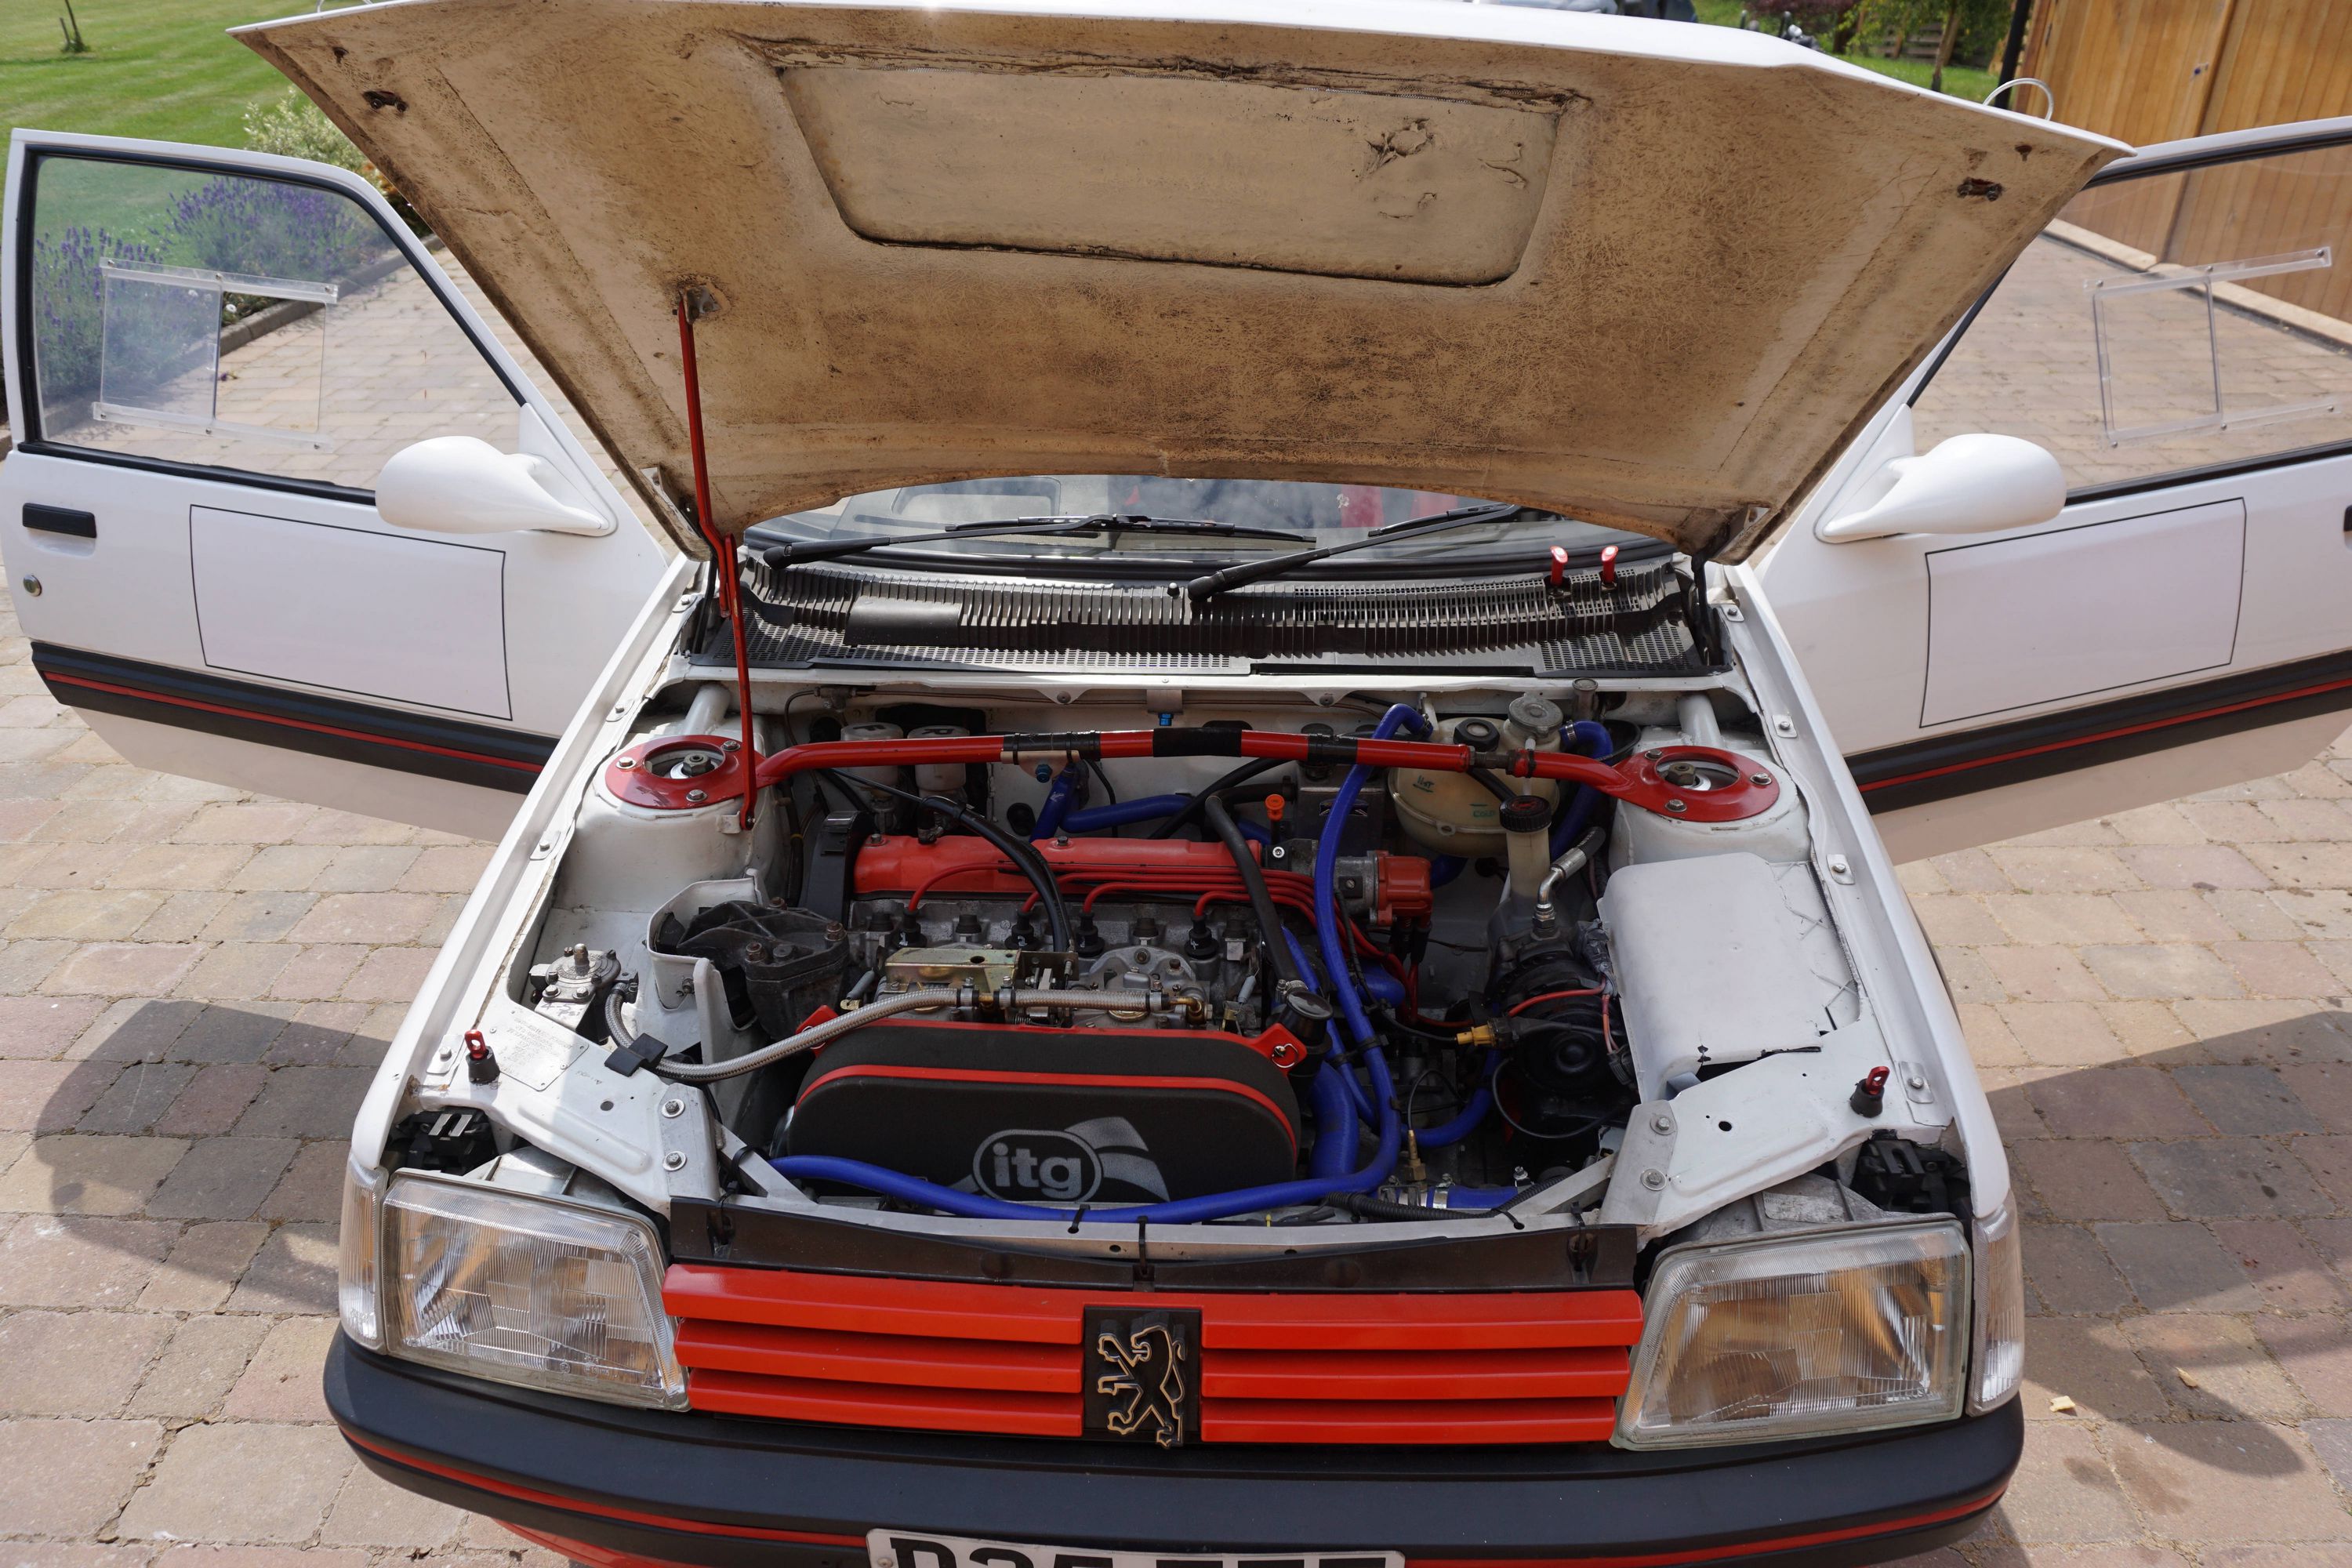 Peugeot 205 GTi 1.6 Rally Car